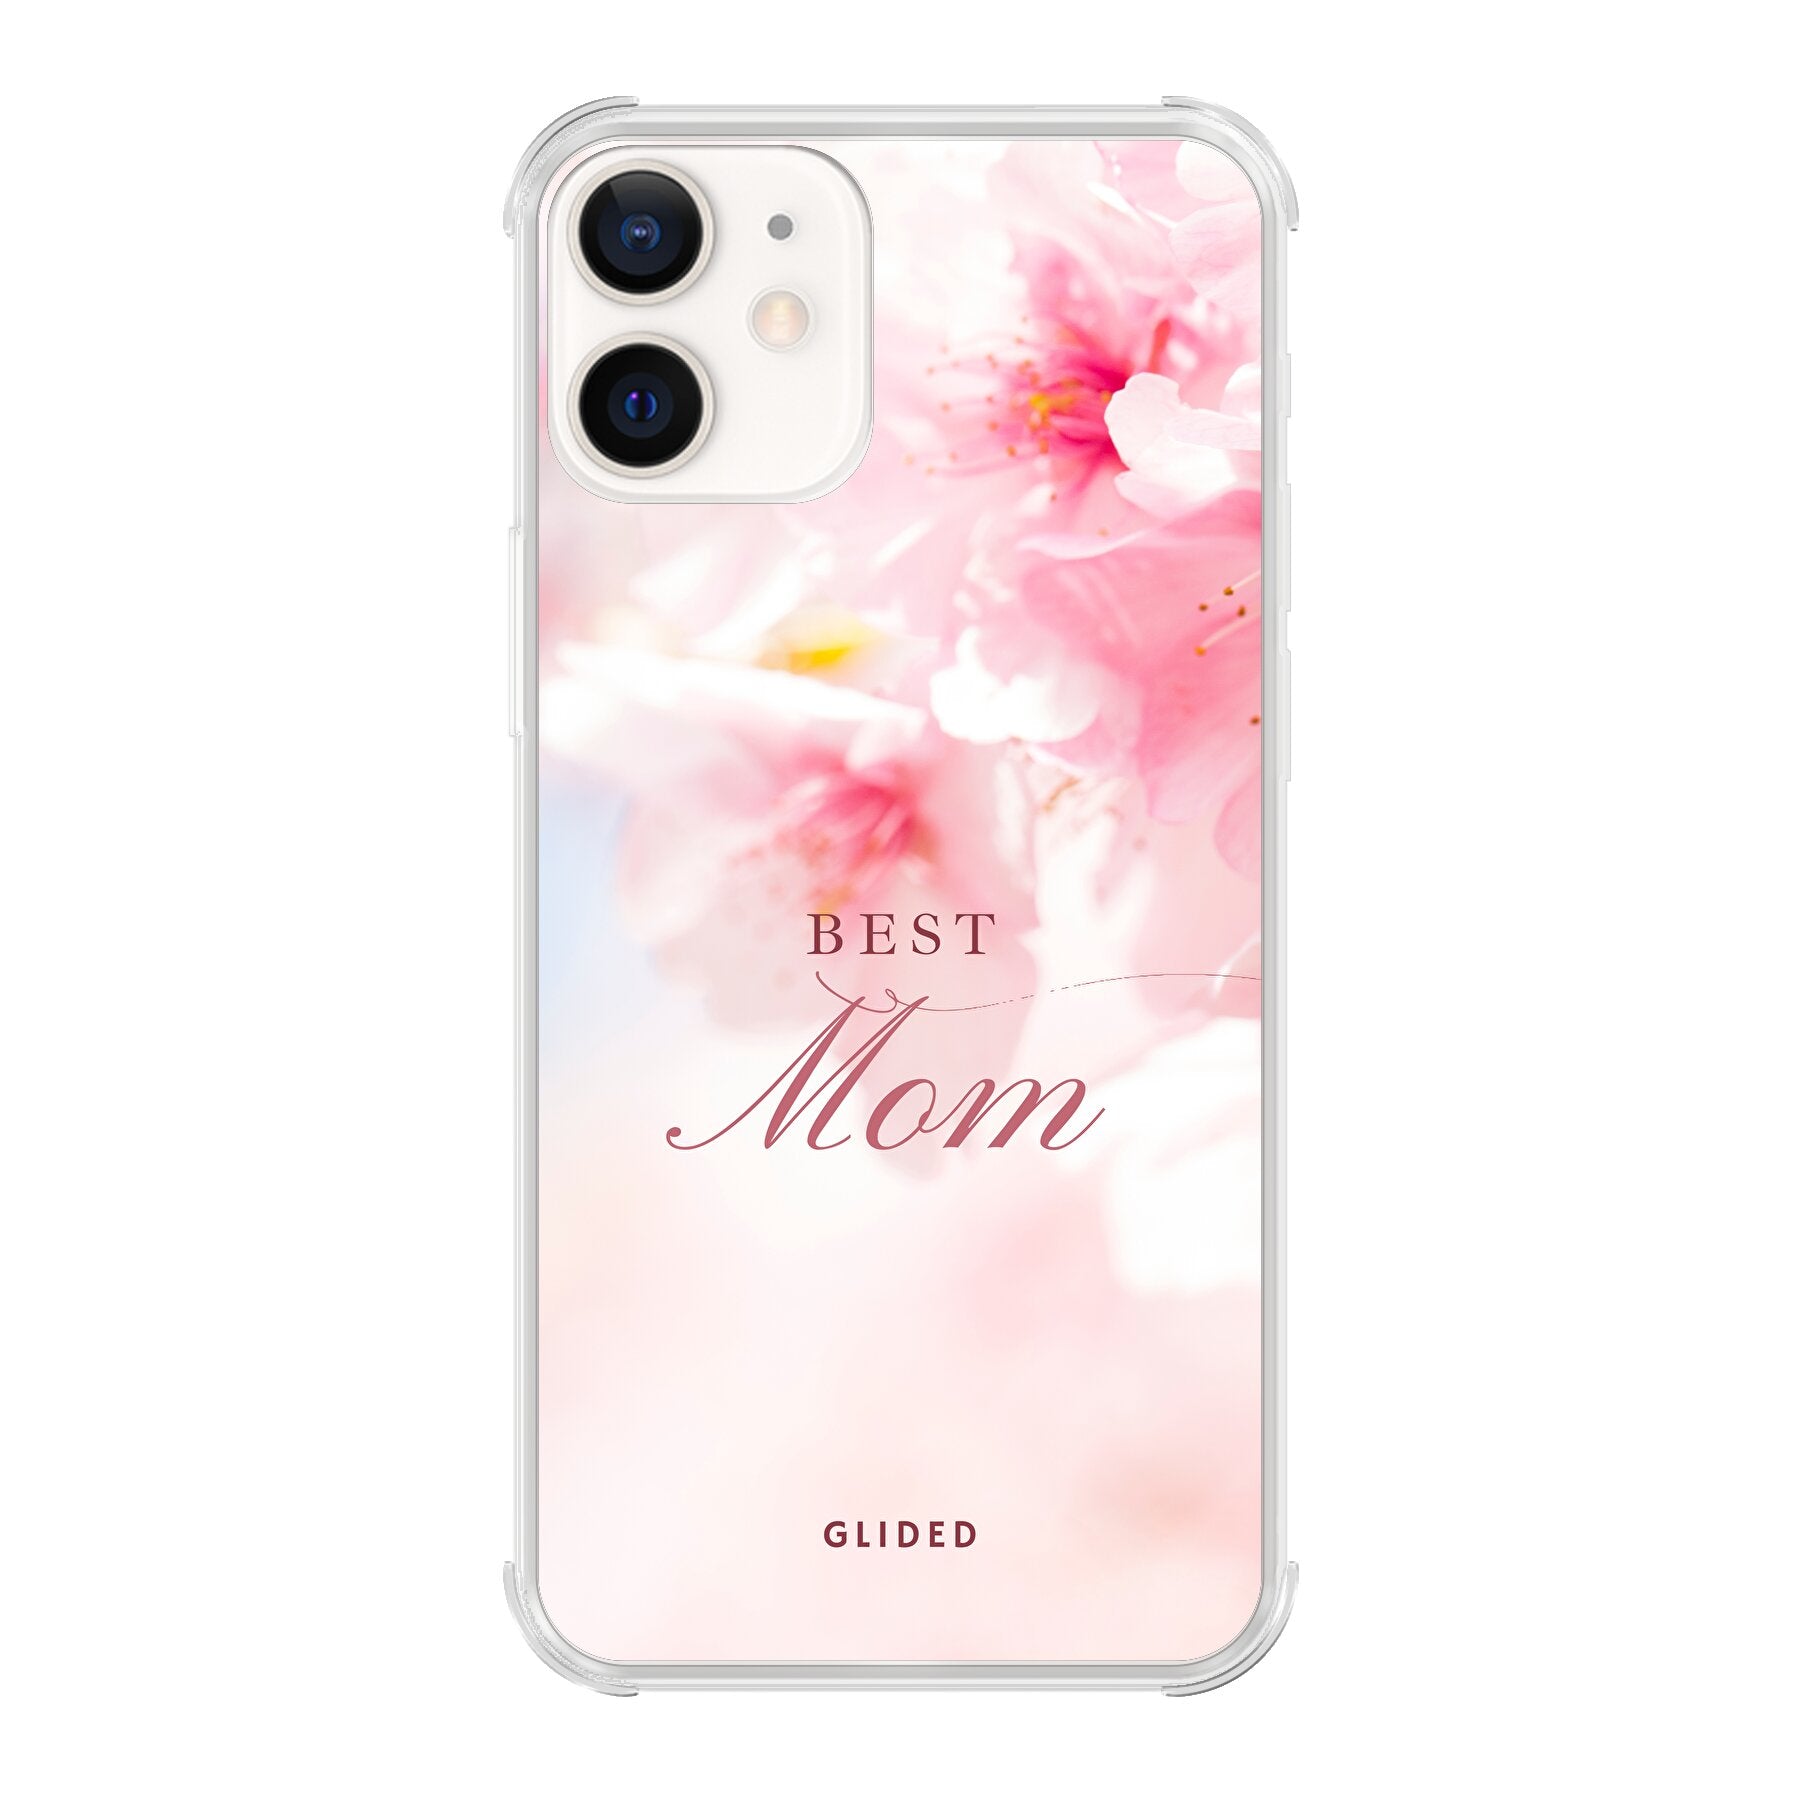 Flower Power - iPhone 12 - Bumper case